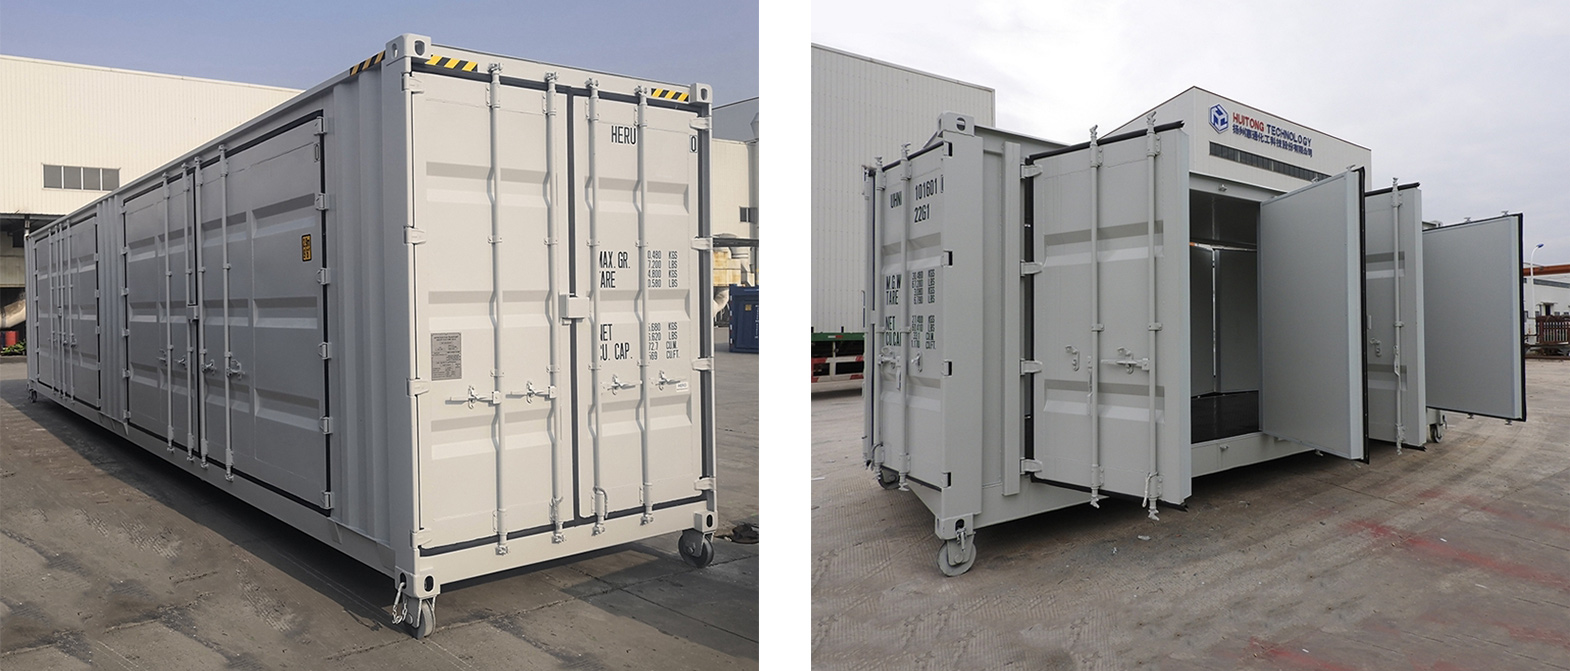 Custom Storage Containers